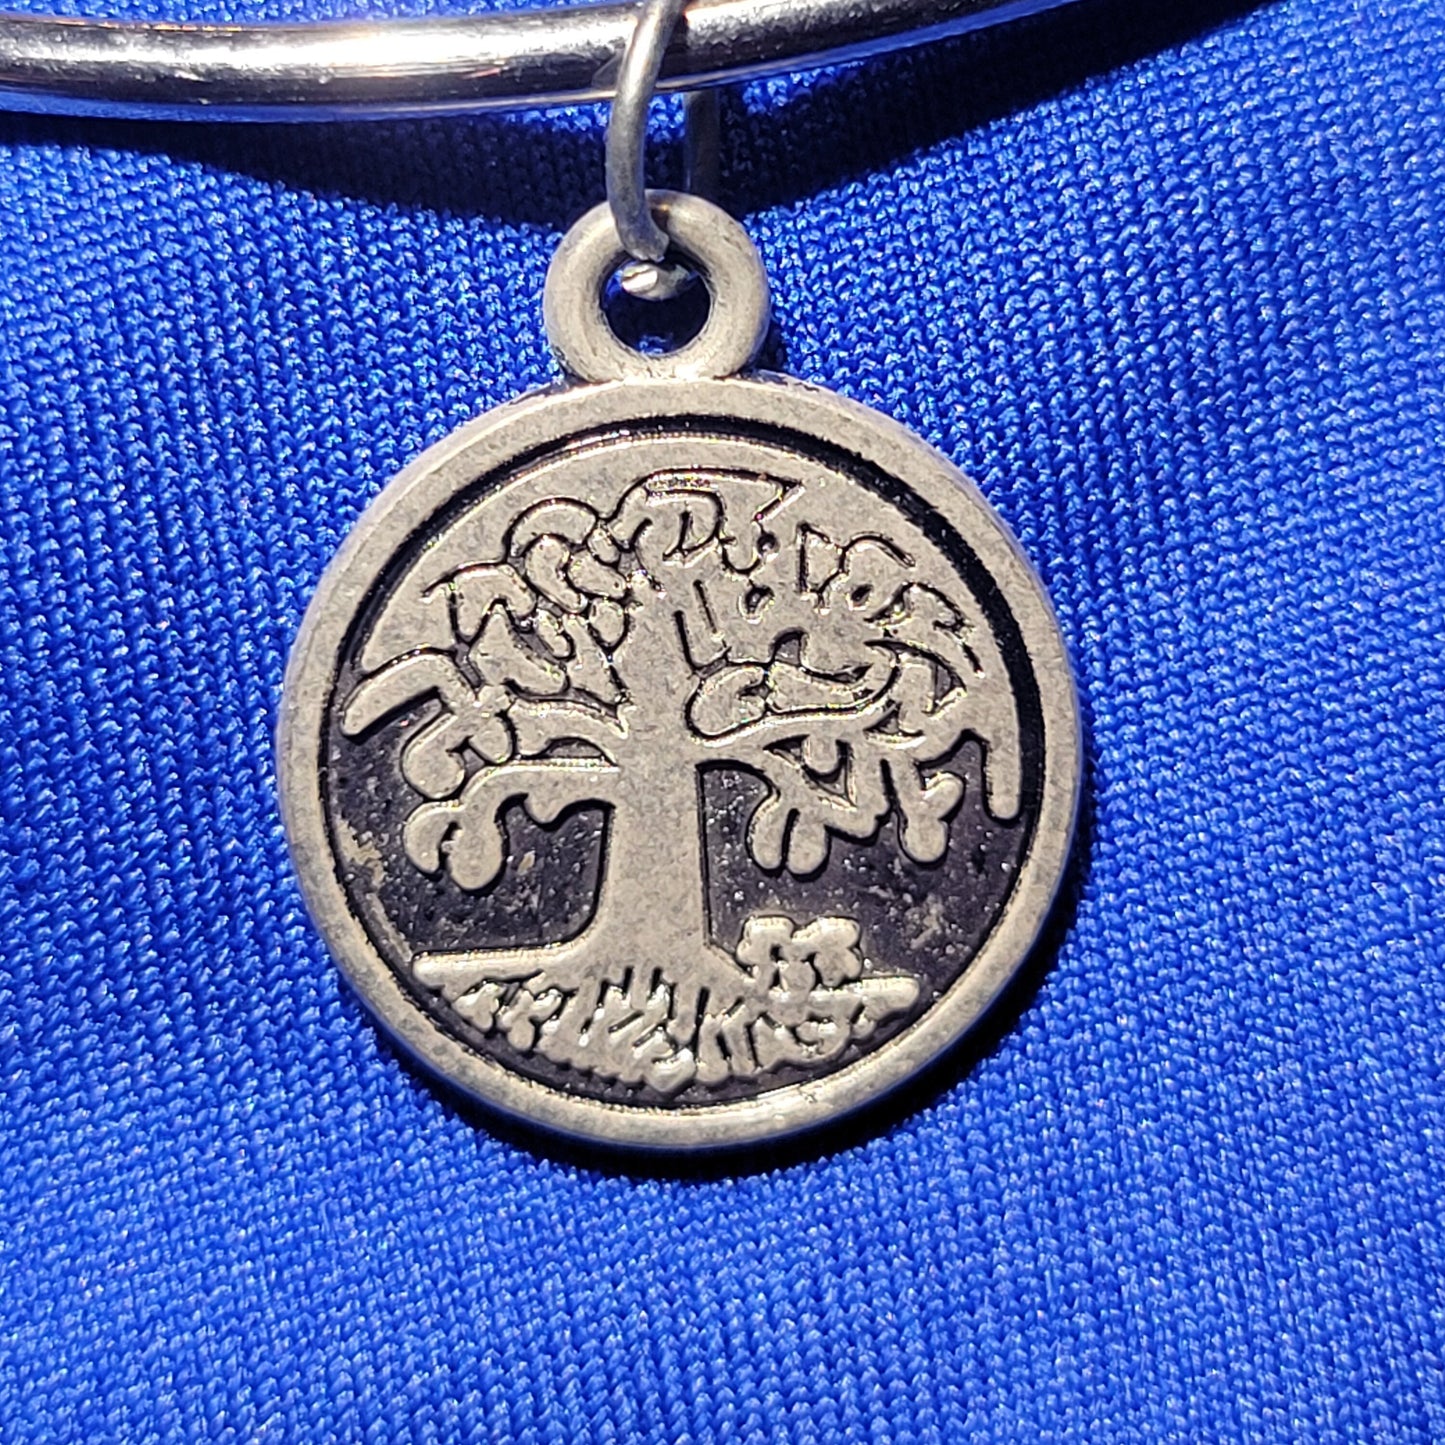 Tree of Life Charm Bracelet